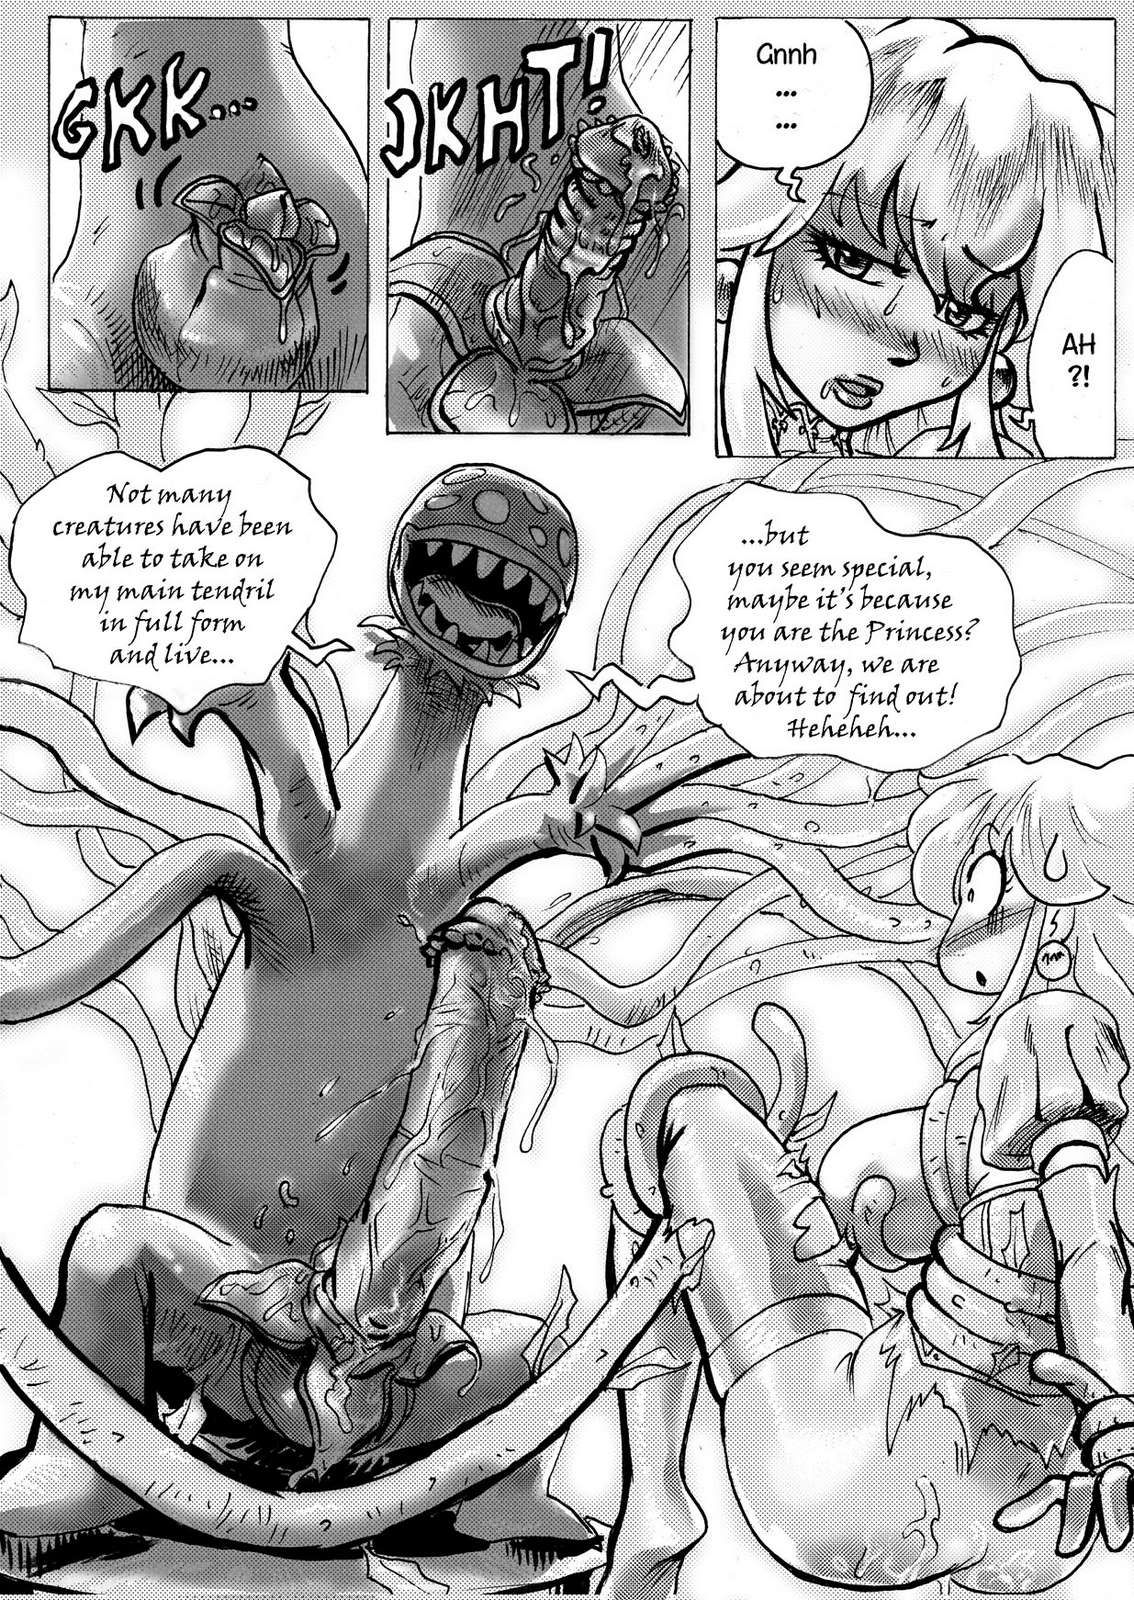 Super Wild Adventure 2 by Saikyo3B page 12